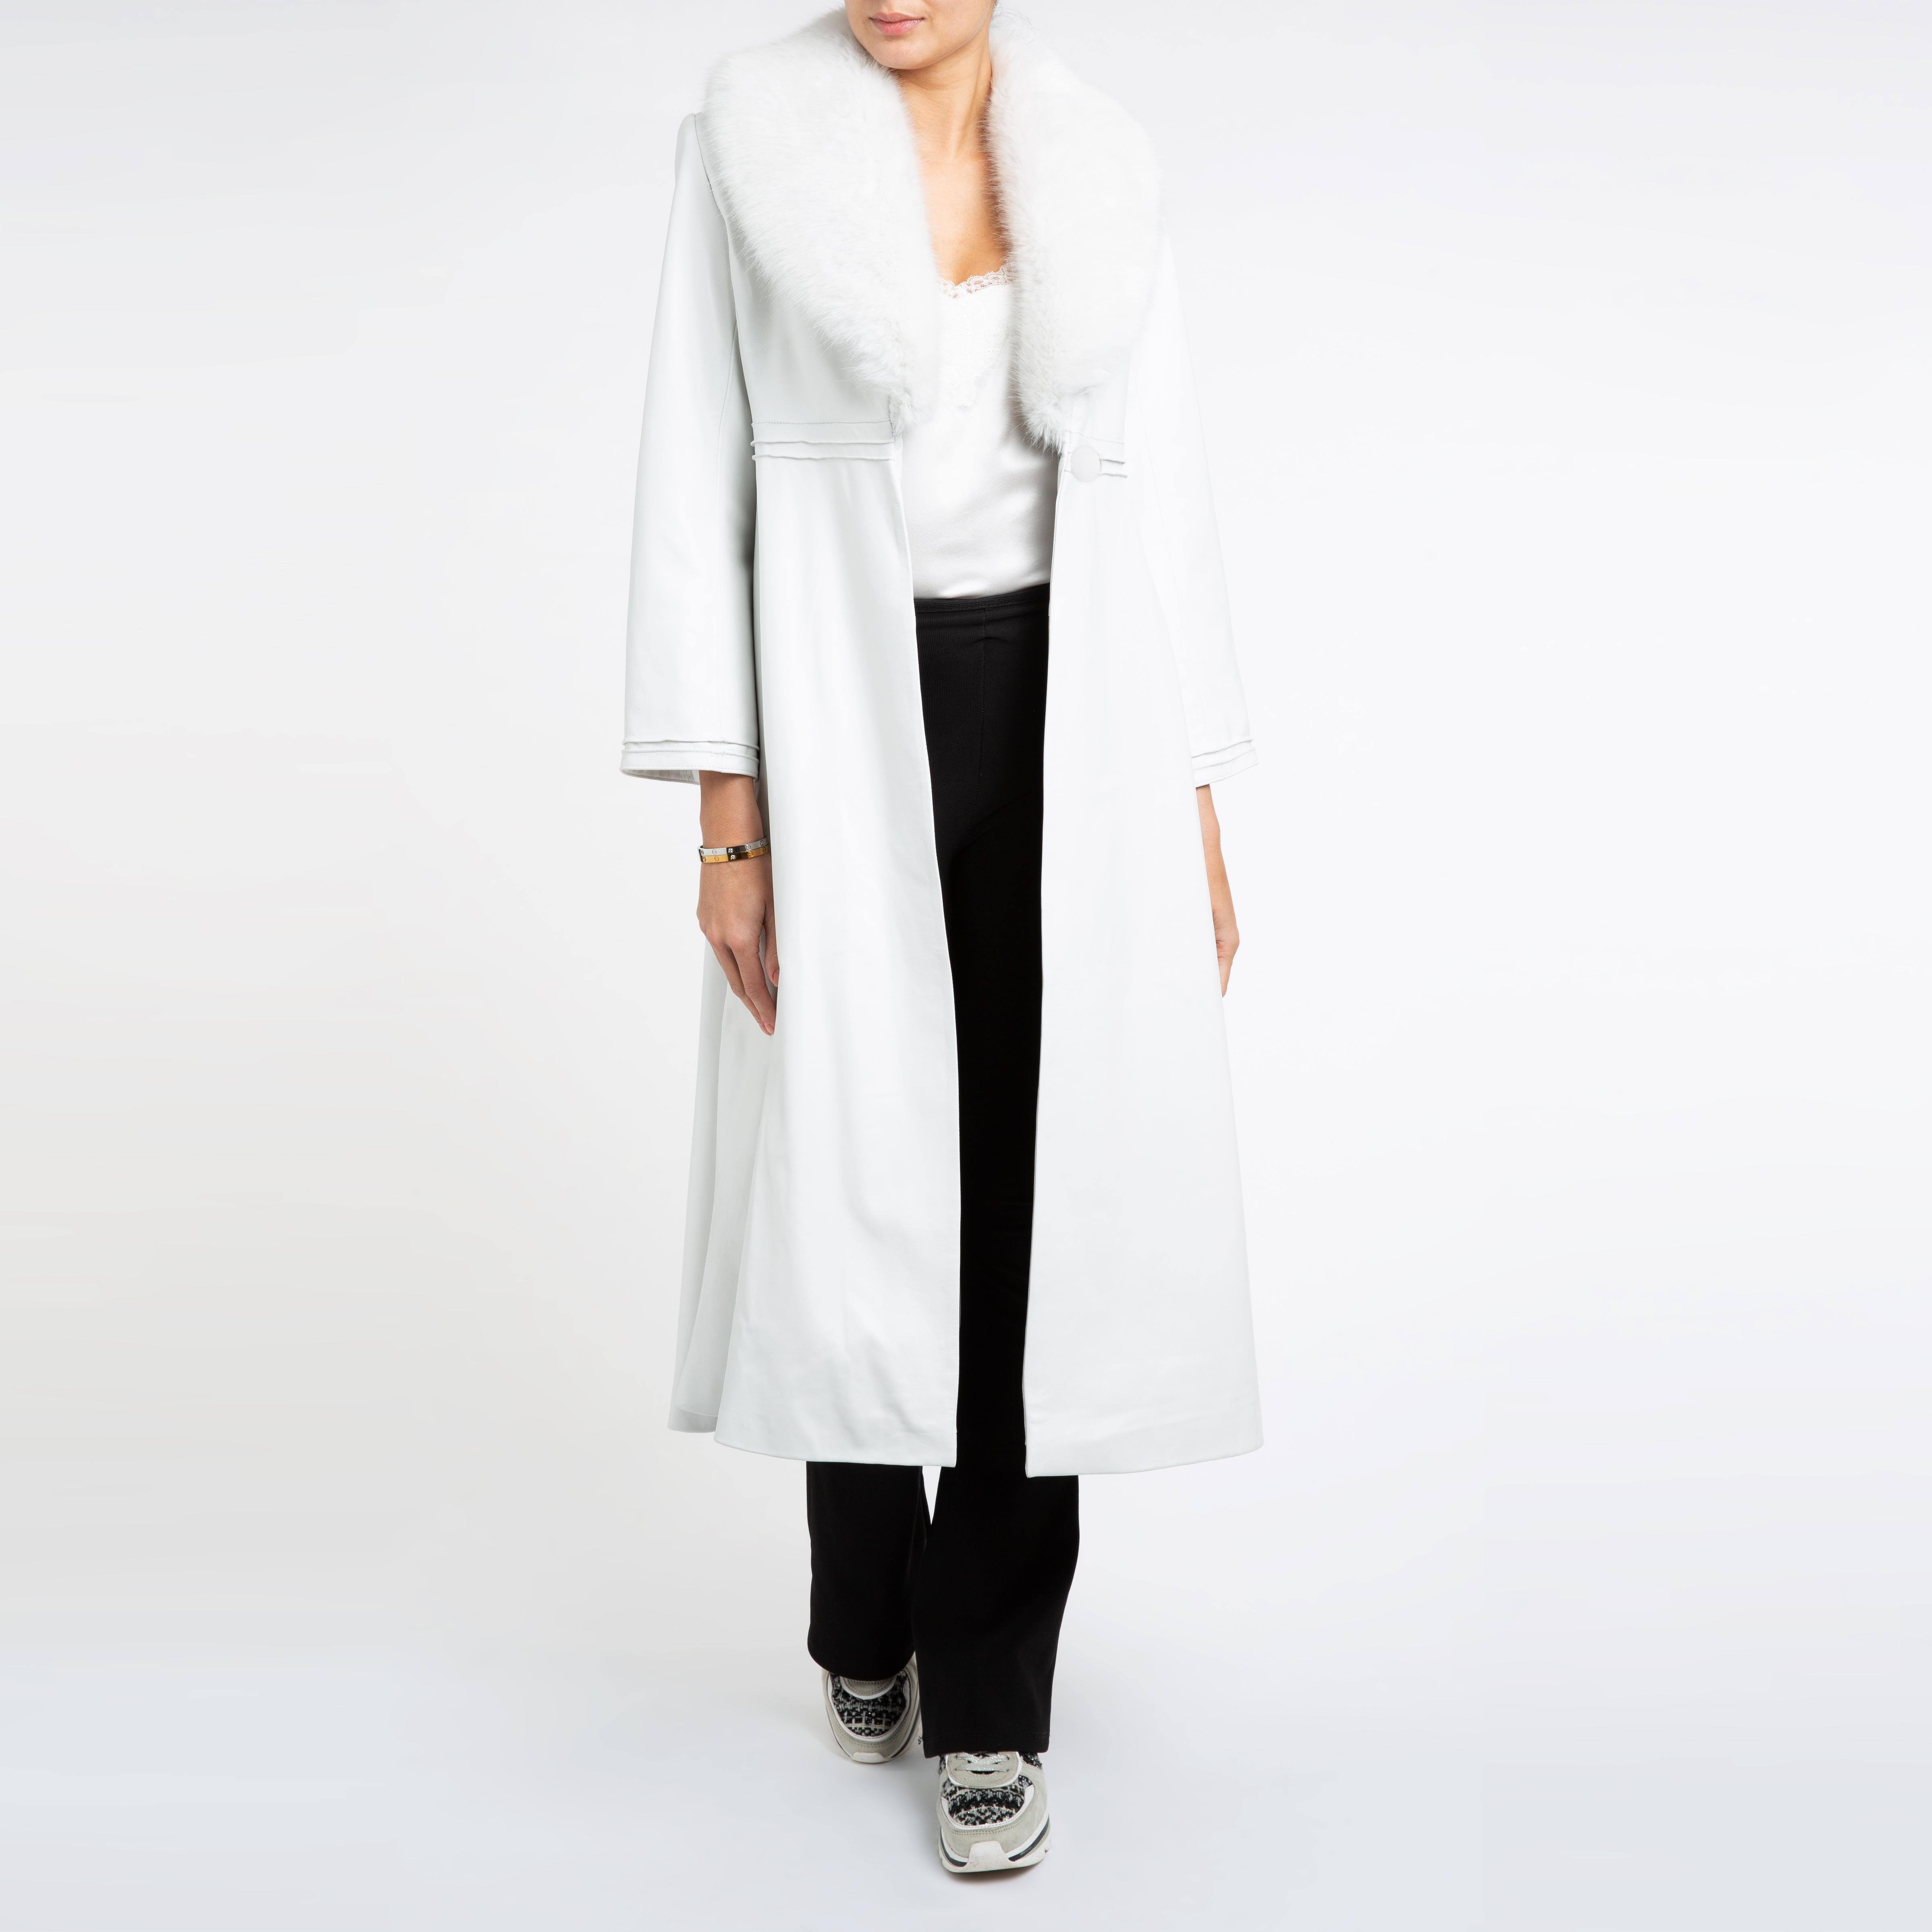 Verheyen London Edward Leather Coat in White with Faux Fur - Size uk 8  8